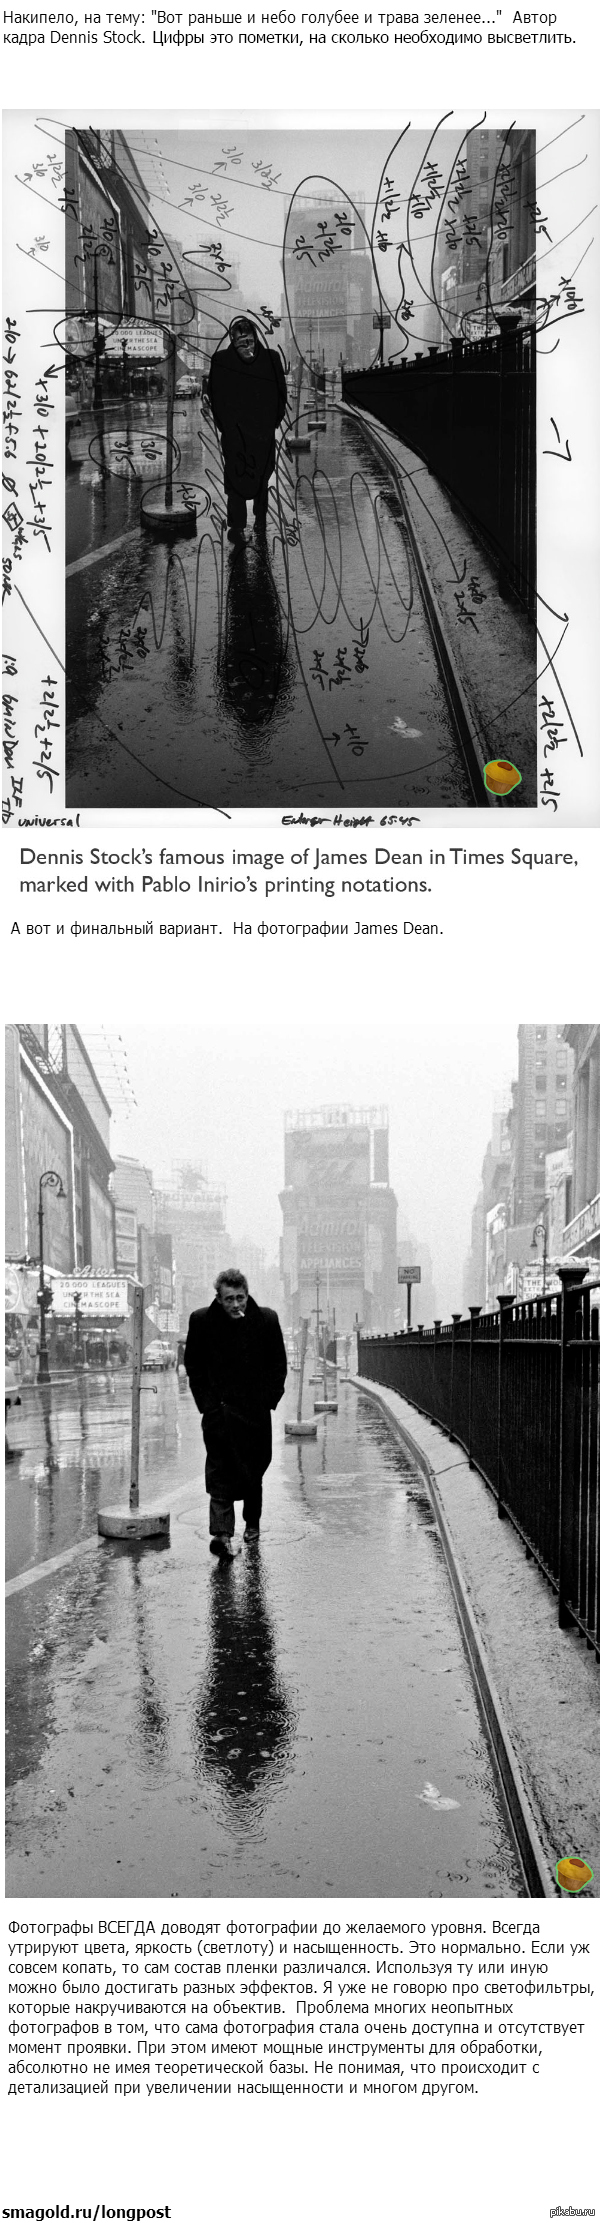 Famous Picture Of James Dean